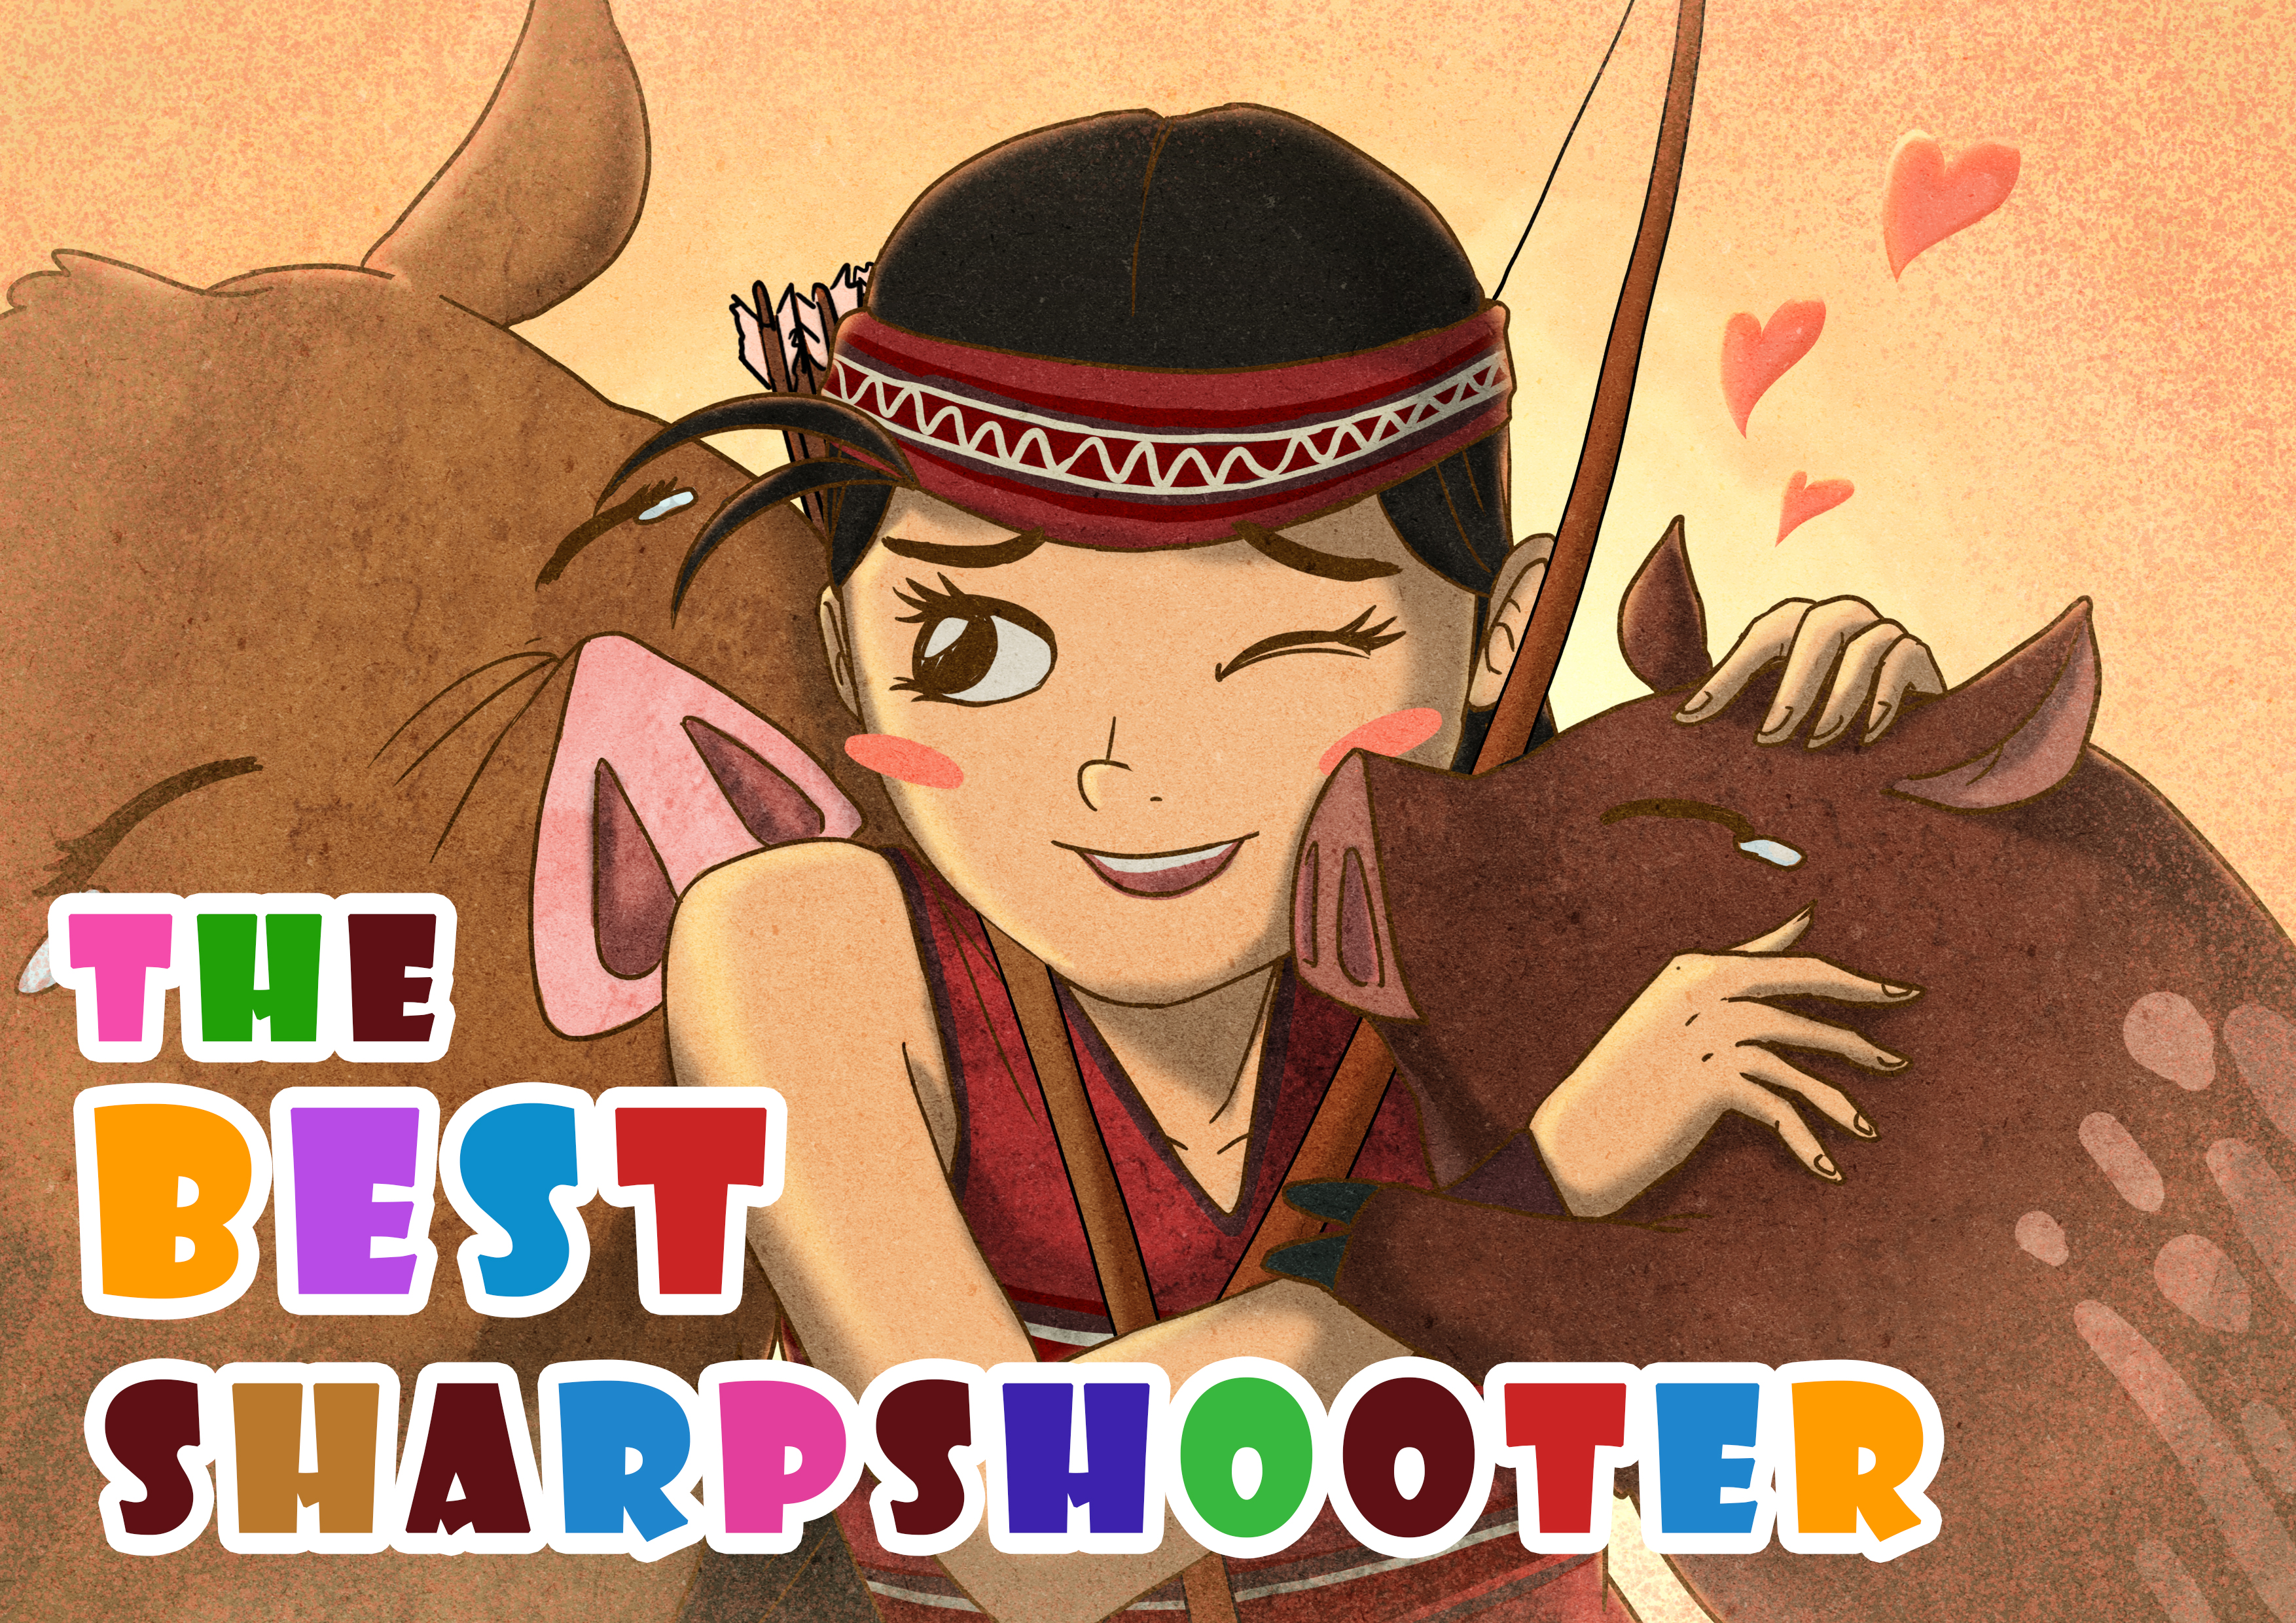 The best sharpshooter